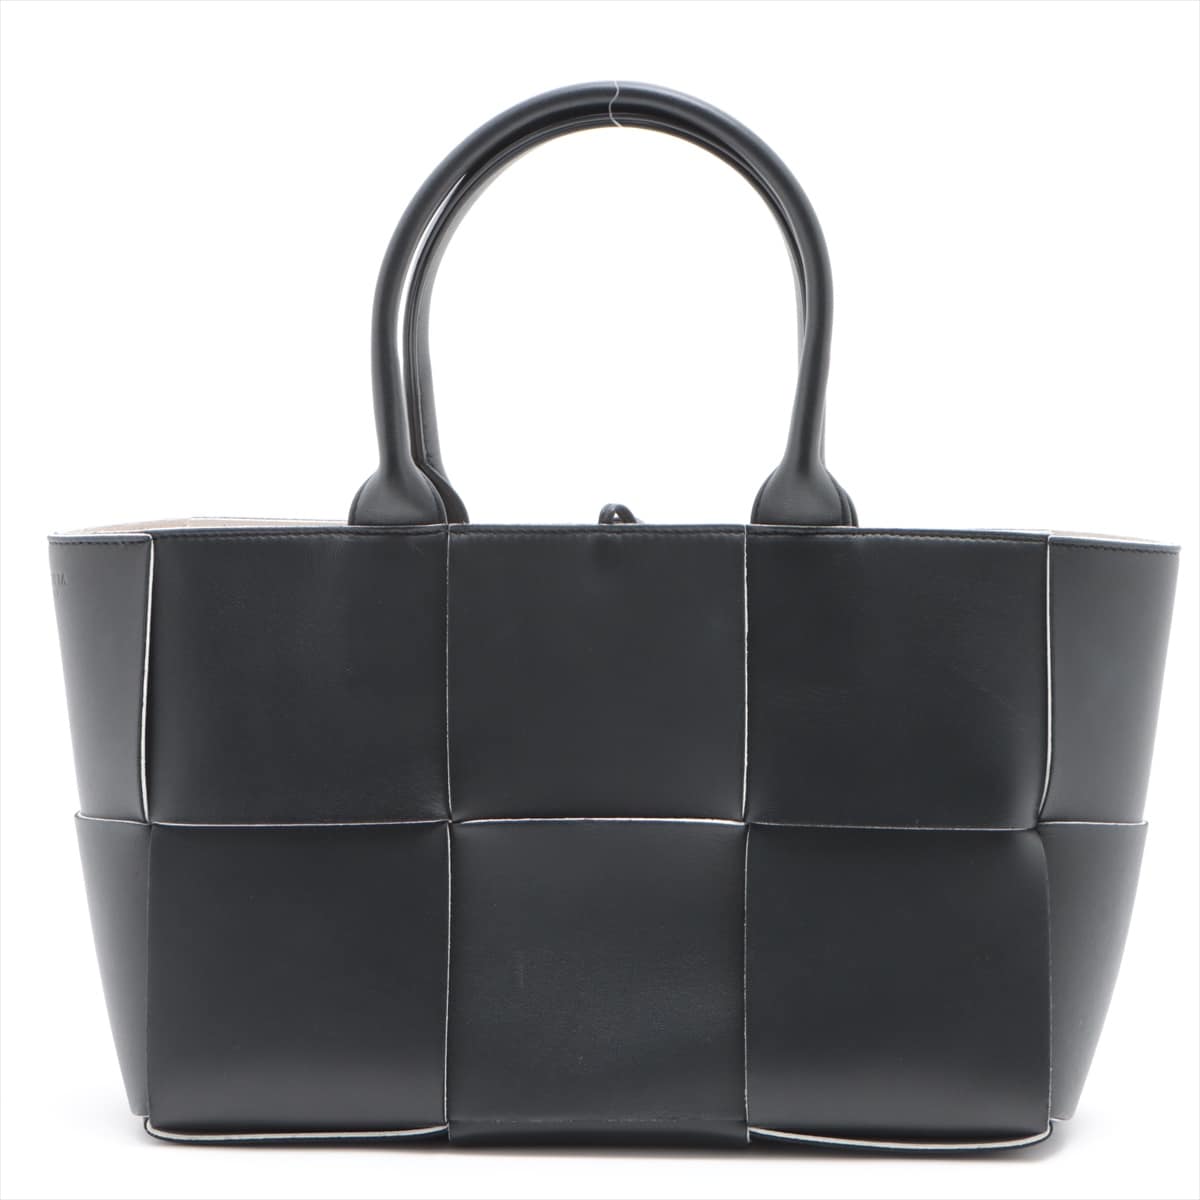 Bottega Veneta The Arco tote Leather Tote bag Black with pouch